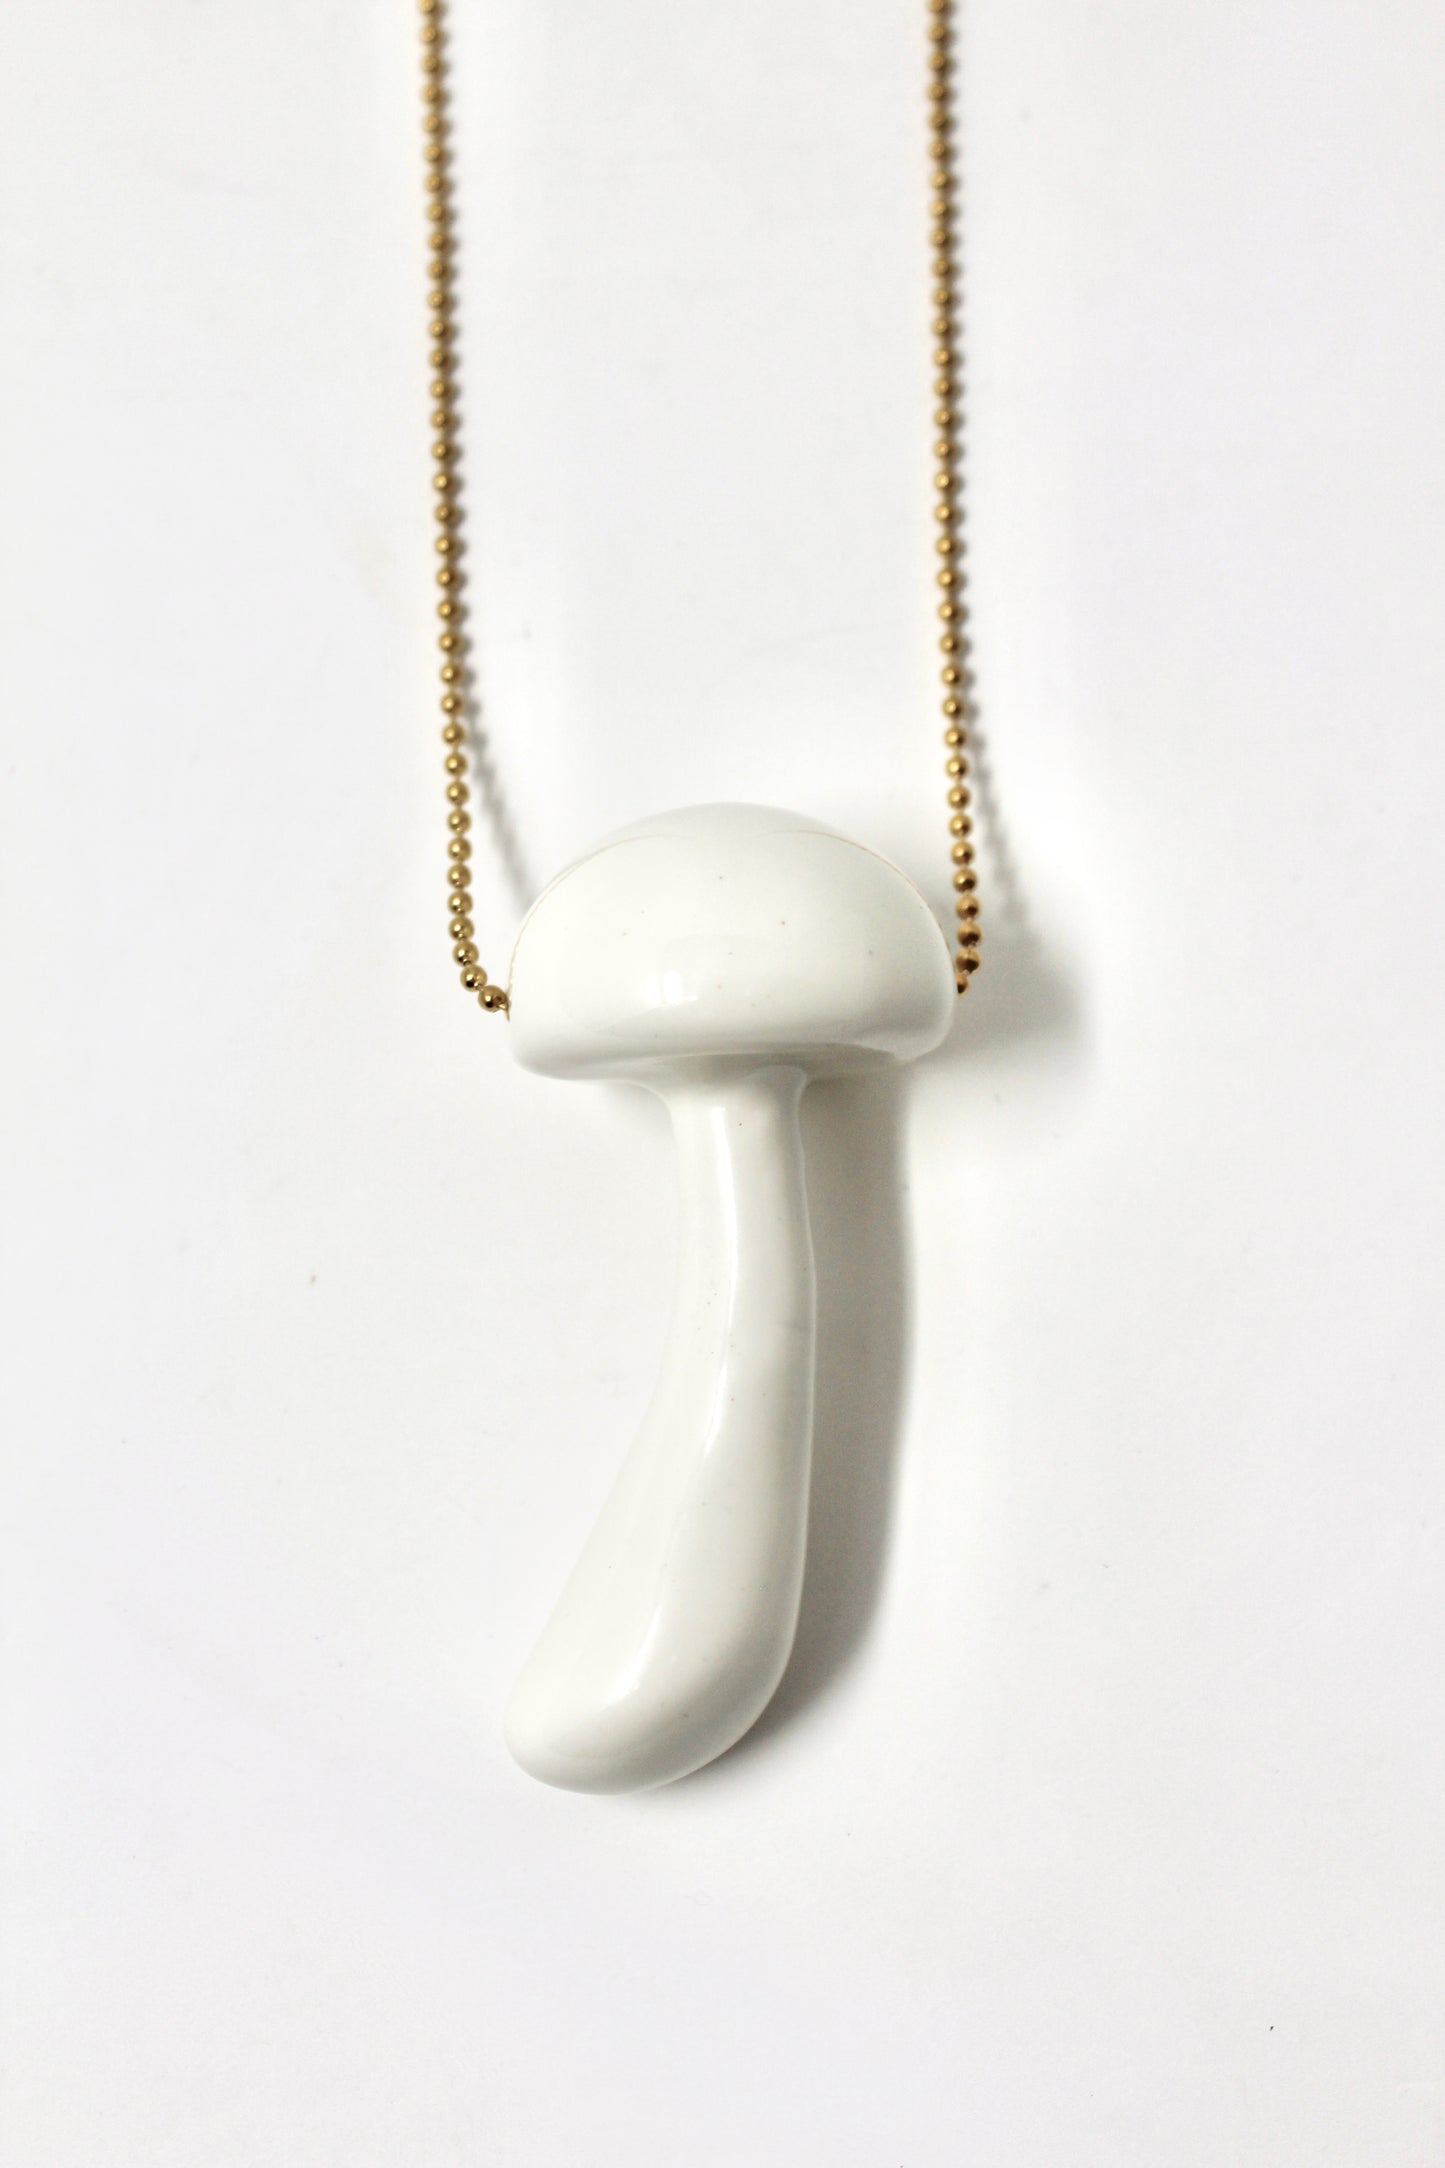 Mushroom necklace